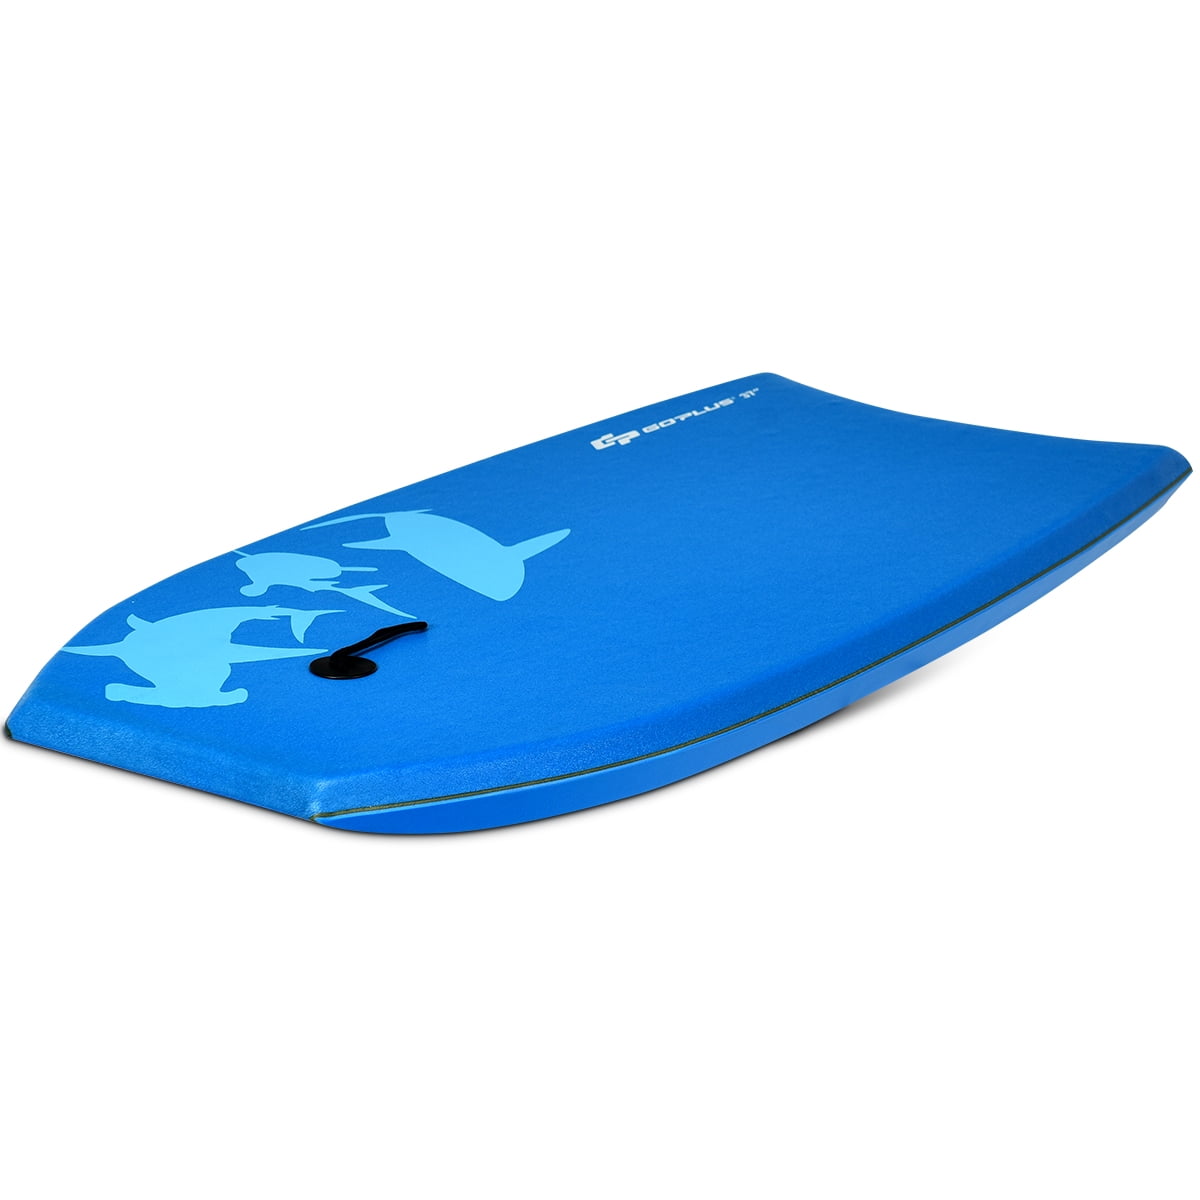 41" Super Surfing Core Bodyboard W/Leash IXPE Deck EPS  Lightweight Blue 